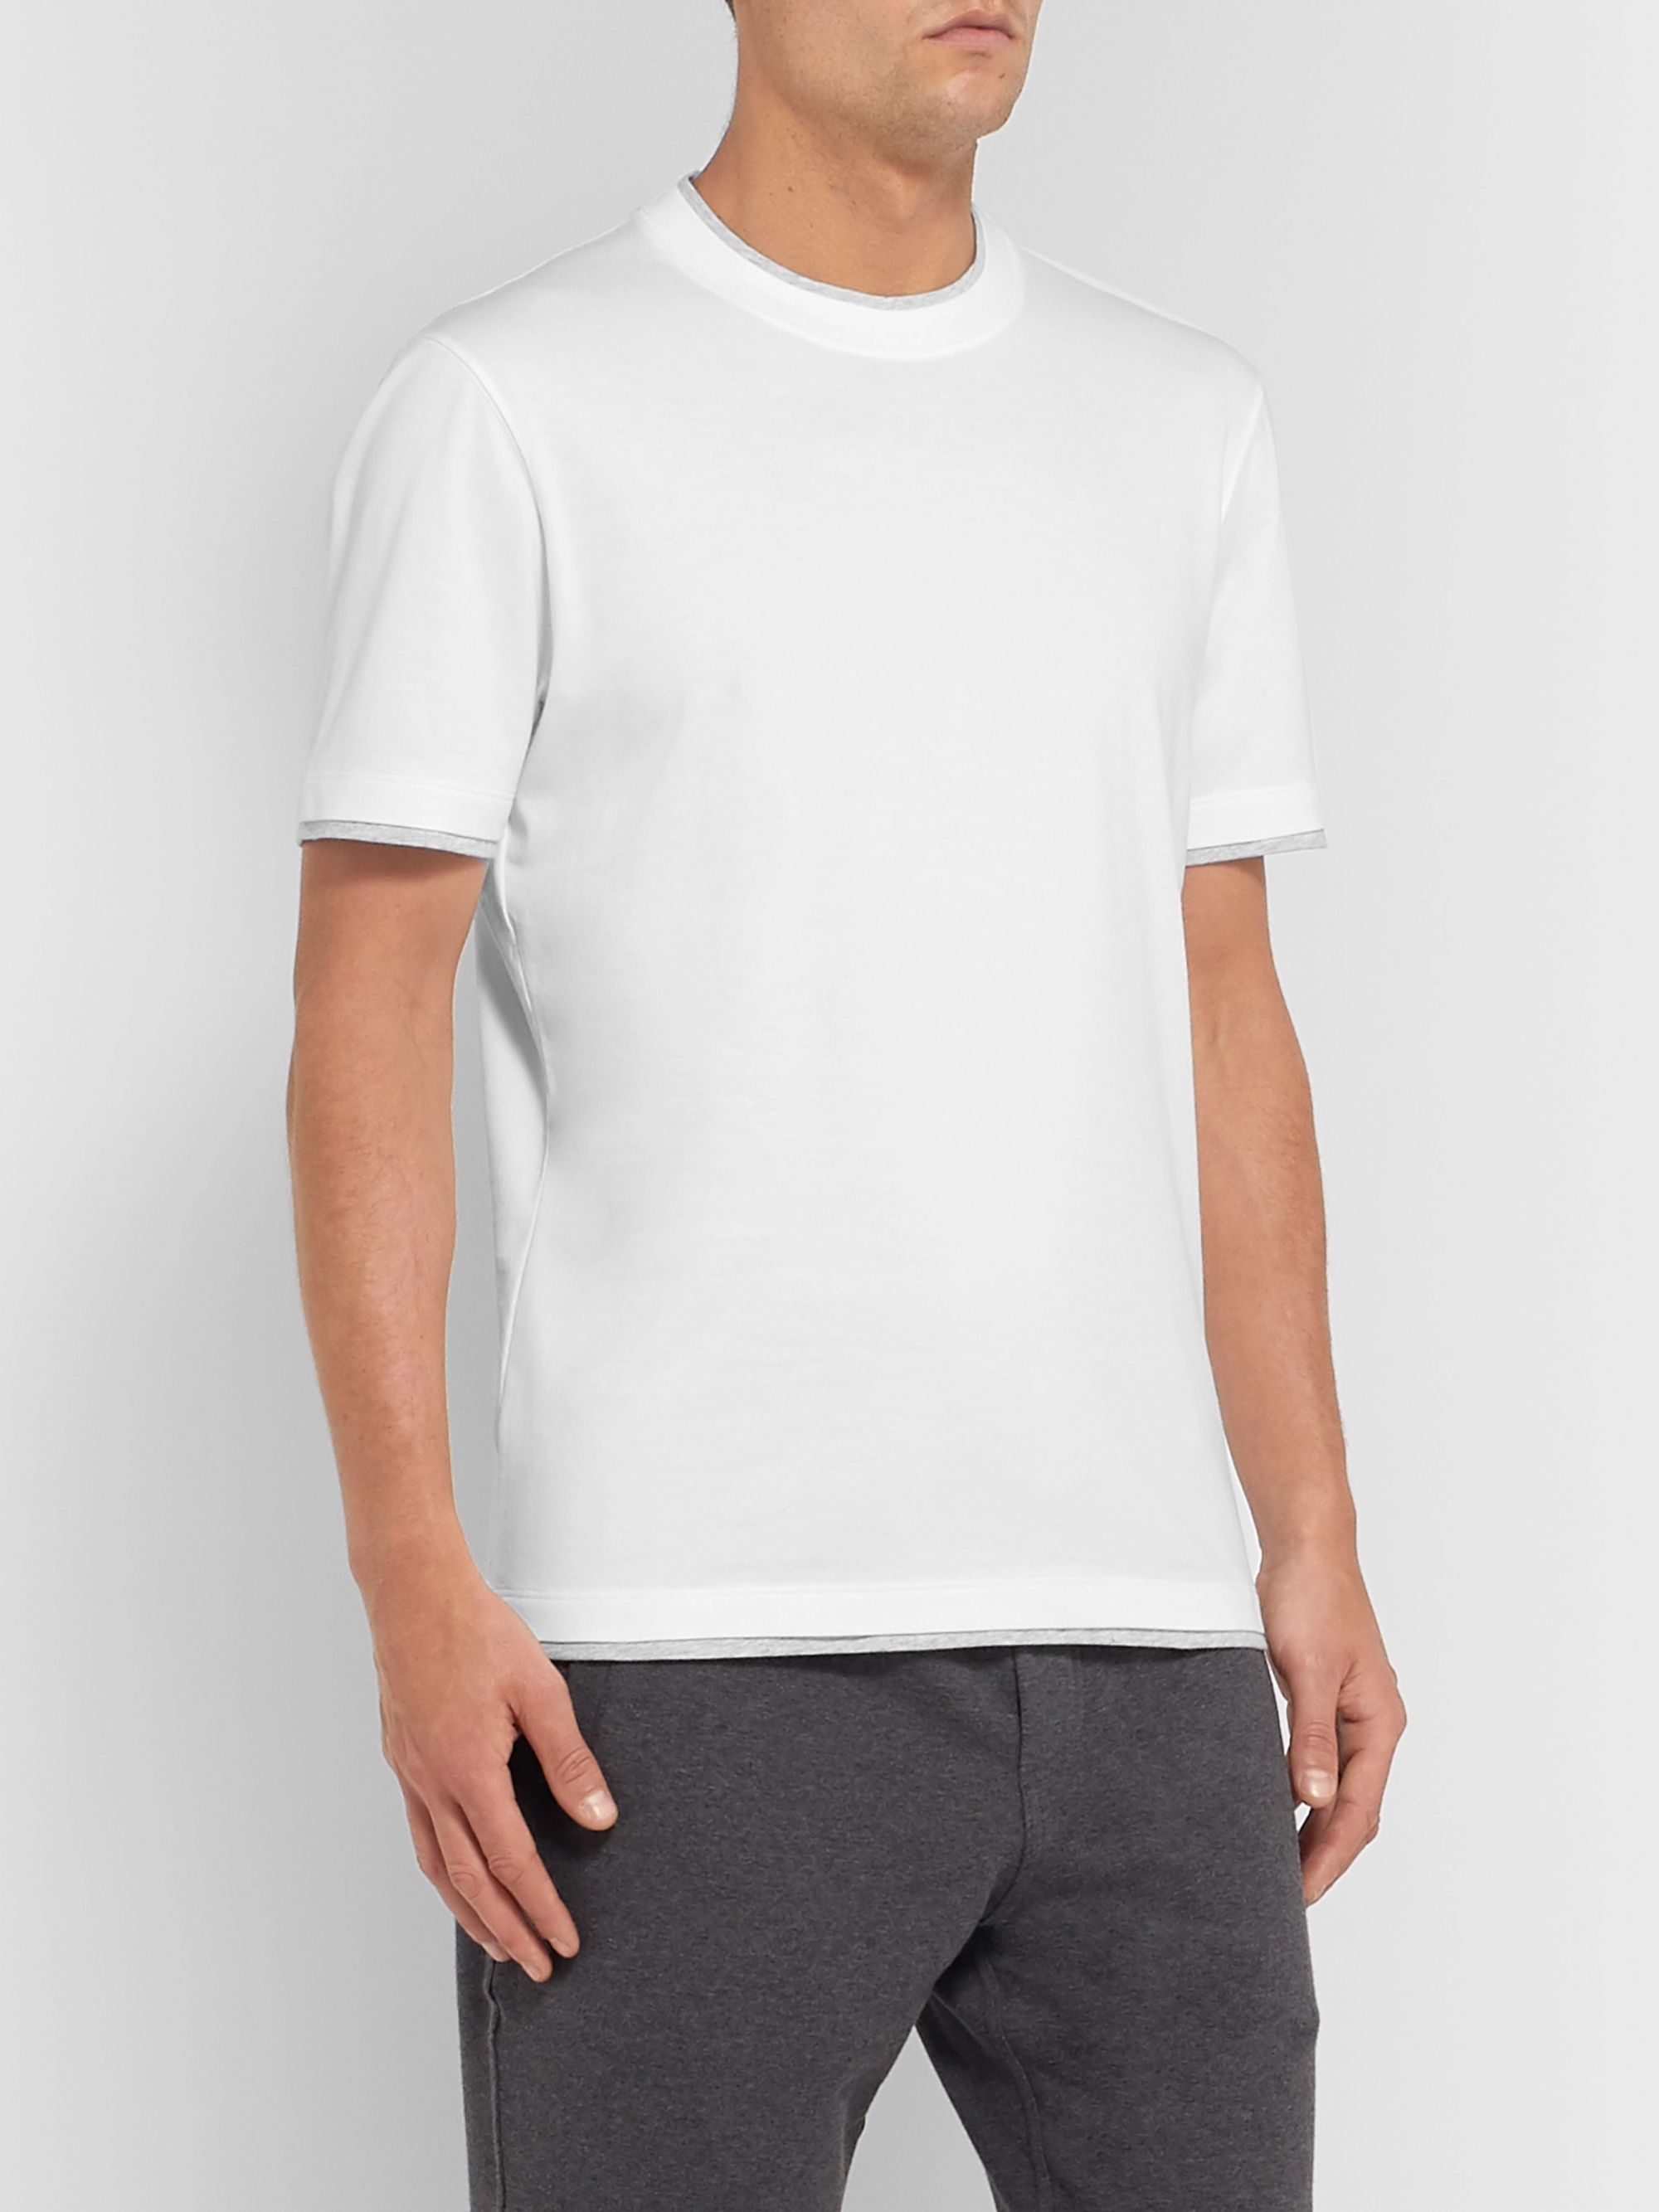 White Slim-Fit Layered Cotton-Jersey T-Shirt | Brunello Cucinelli | MR ...